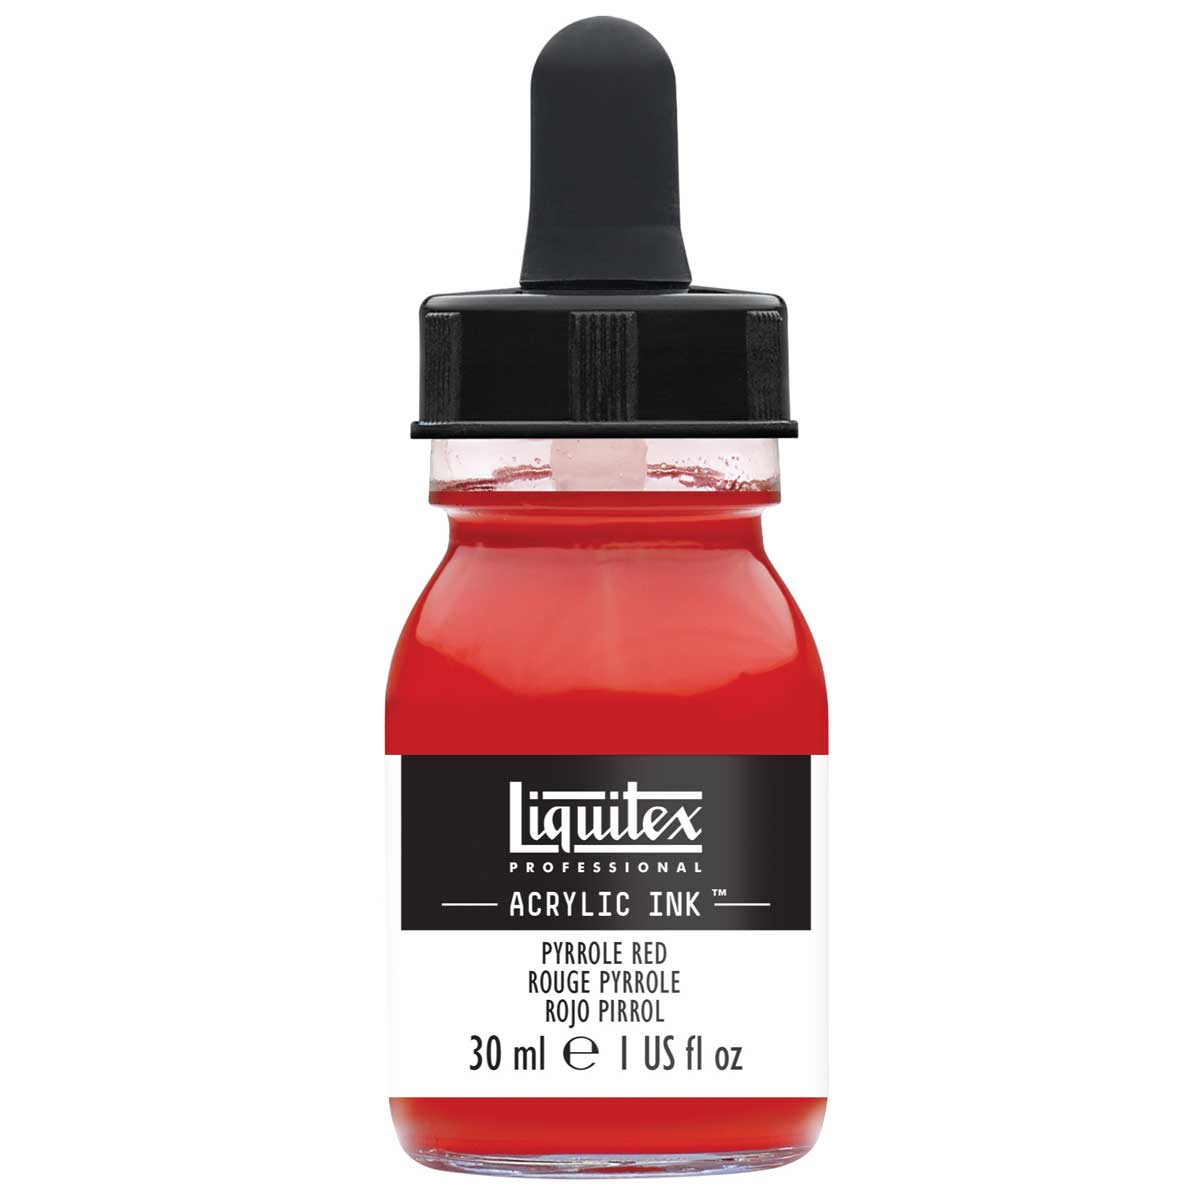 Liquitex Professional Acrylic Ink - Pyrrole Red 30ml/1oz